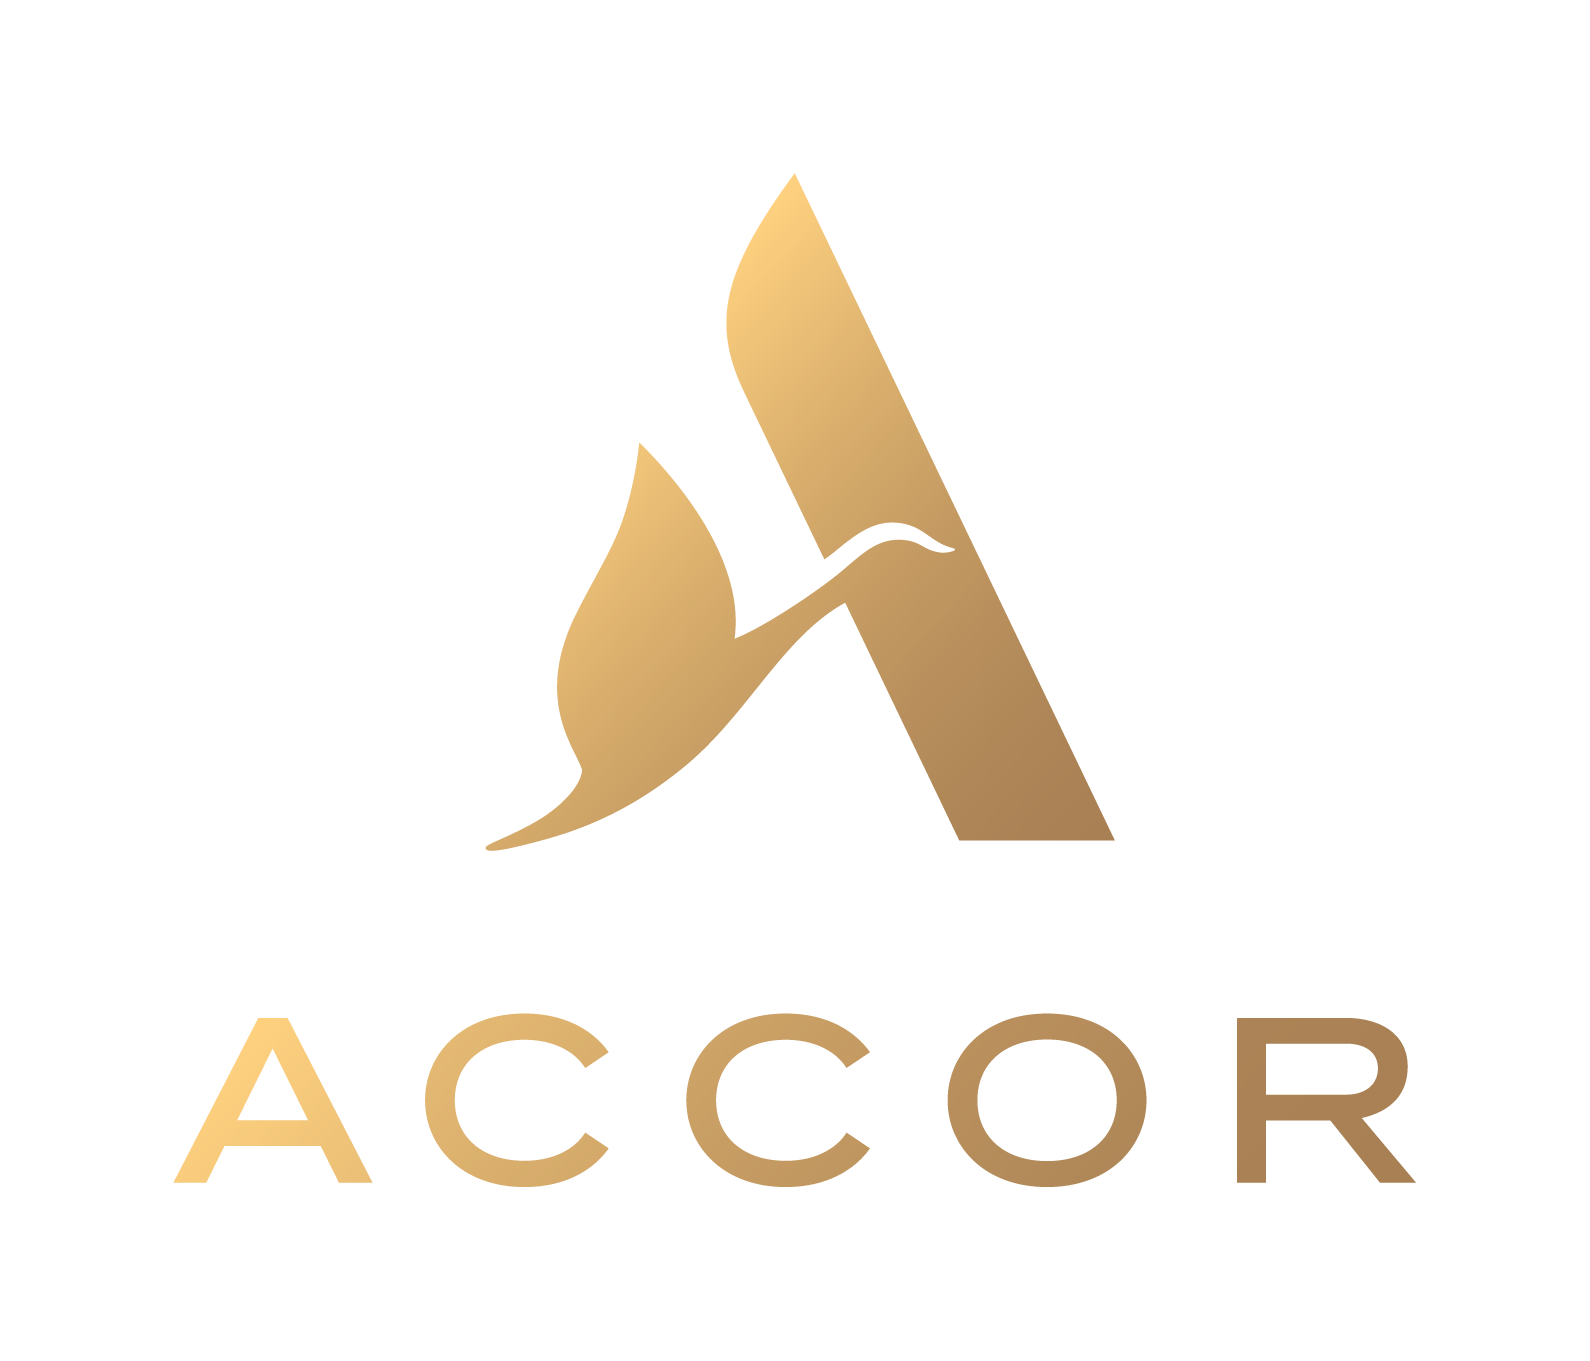 Accor (Company Image) 